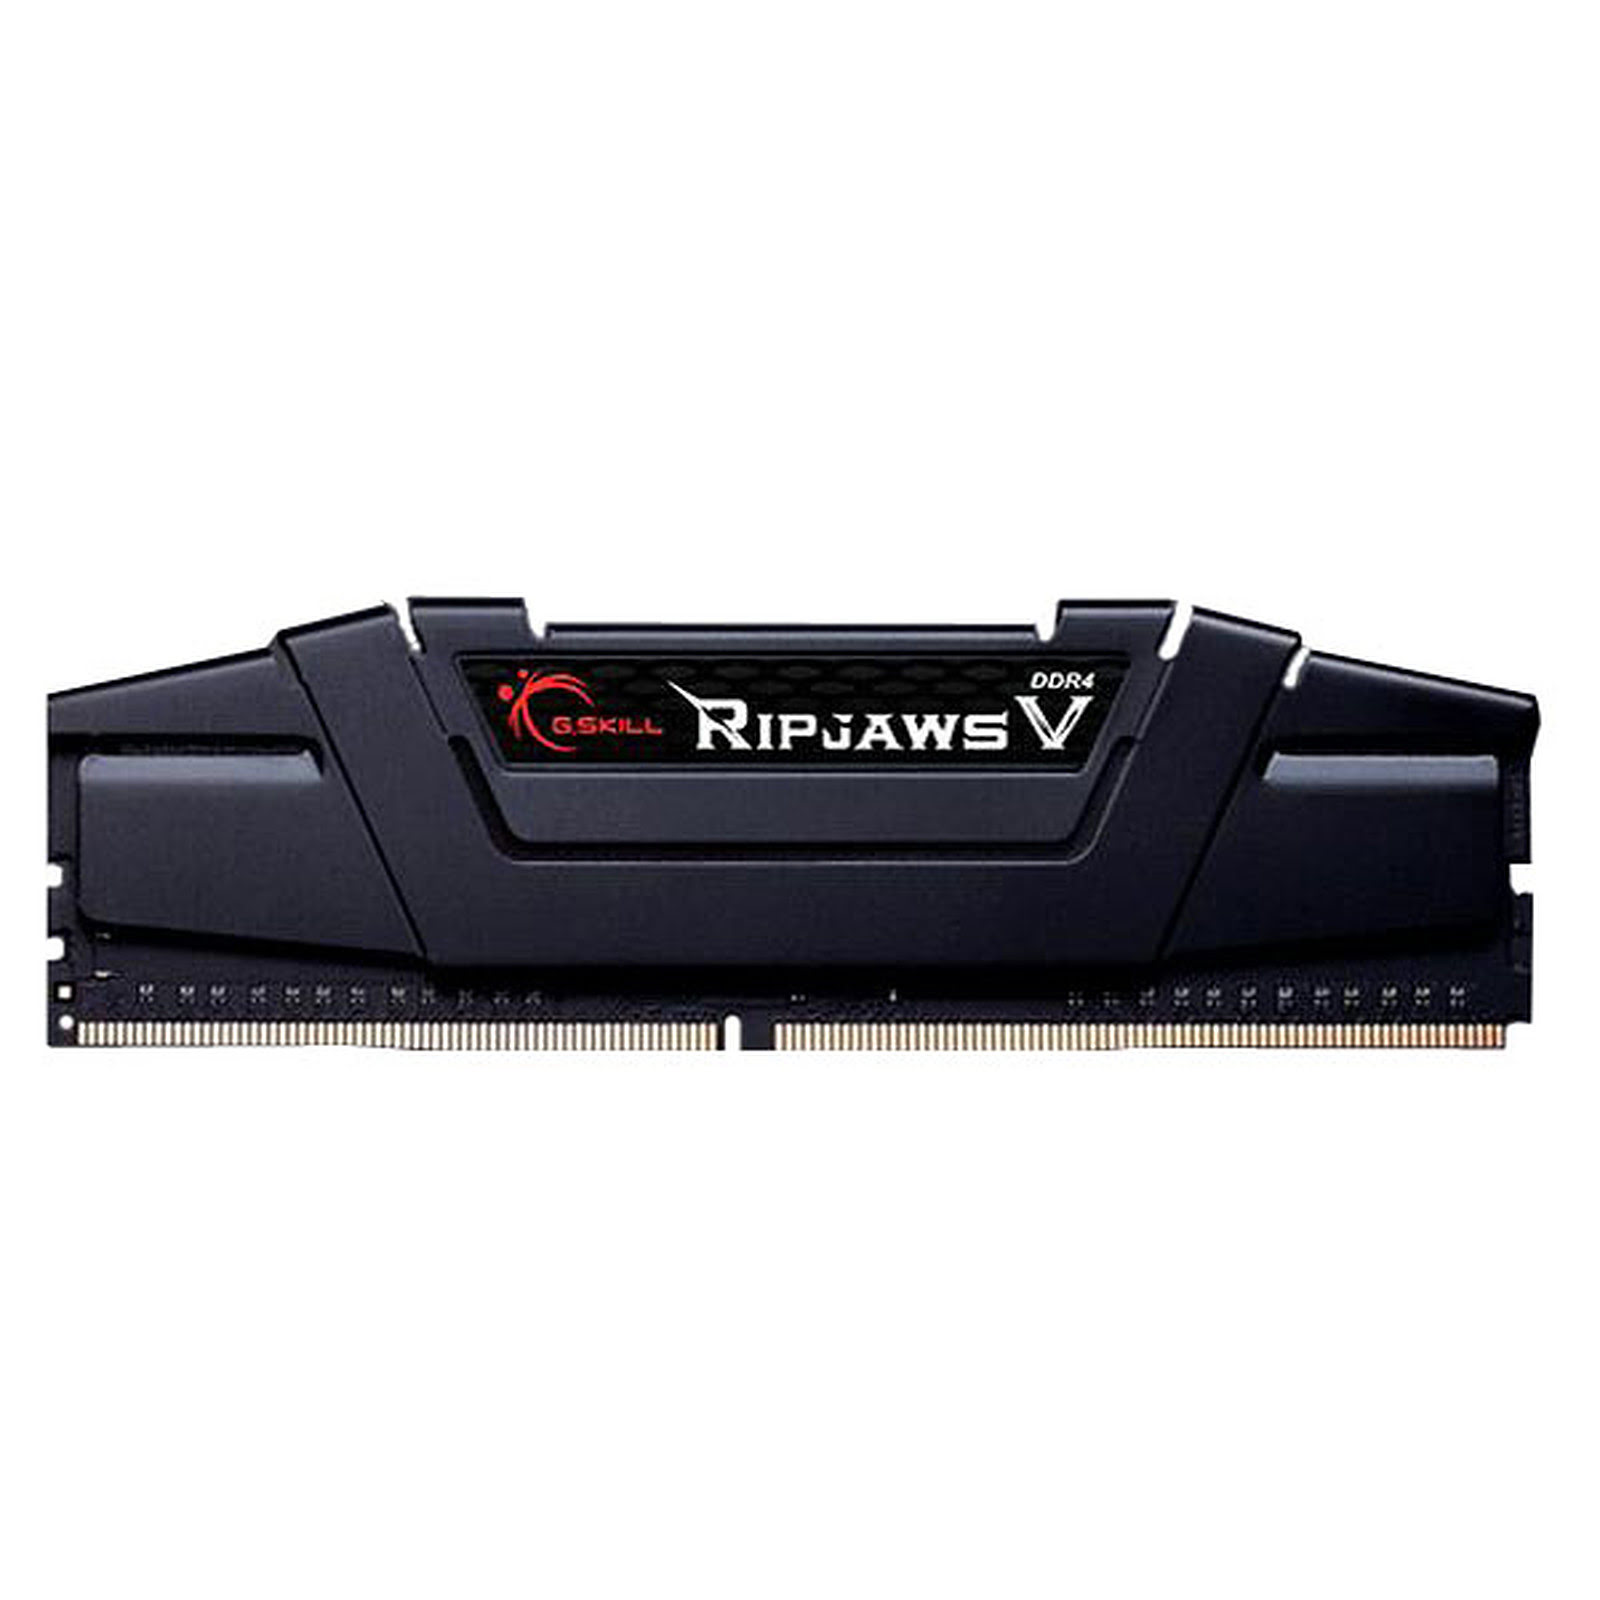 G.Skill Ripjaws V 16Go (2x8Go) DDR4 3200MHz - Mémoire PC G.Skill sur grosbill-pro.com - 1